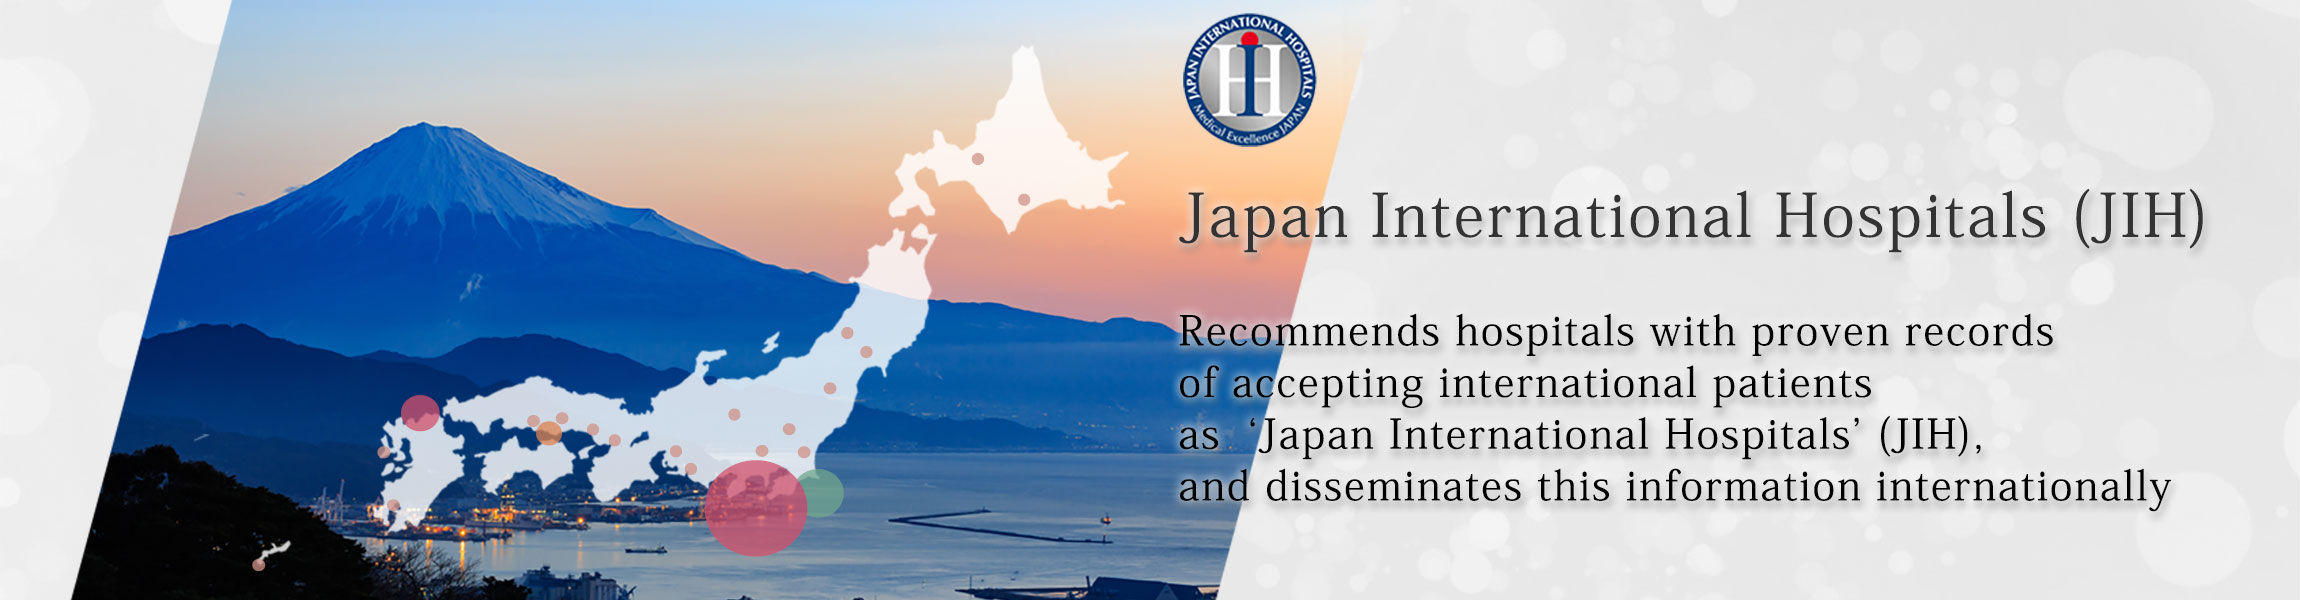 Japan International Hospitals (JIH)